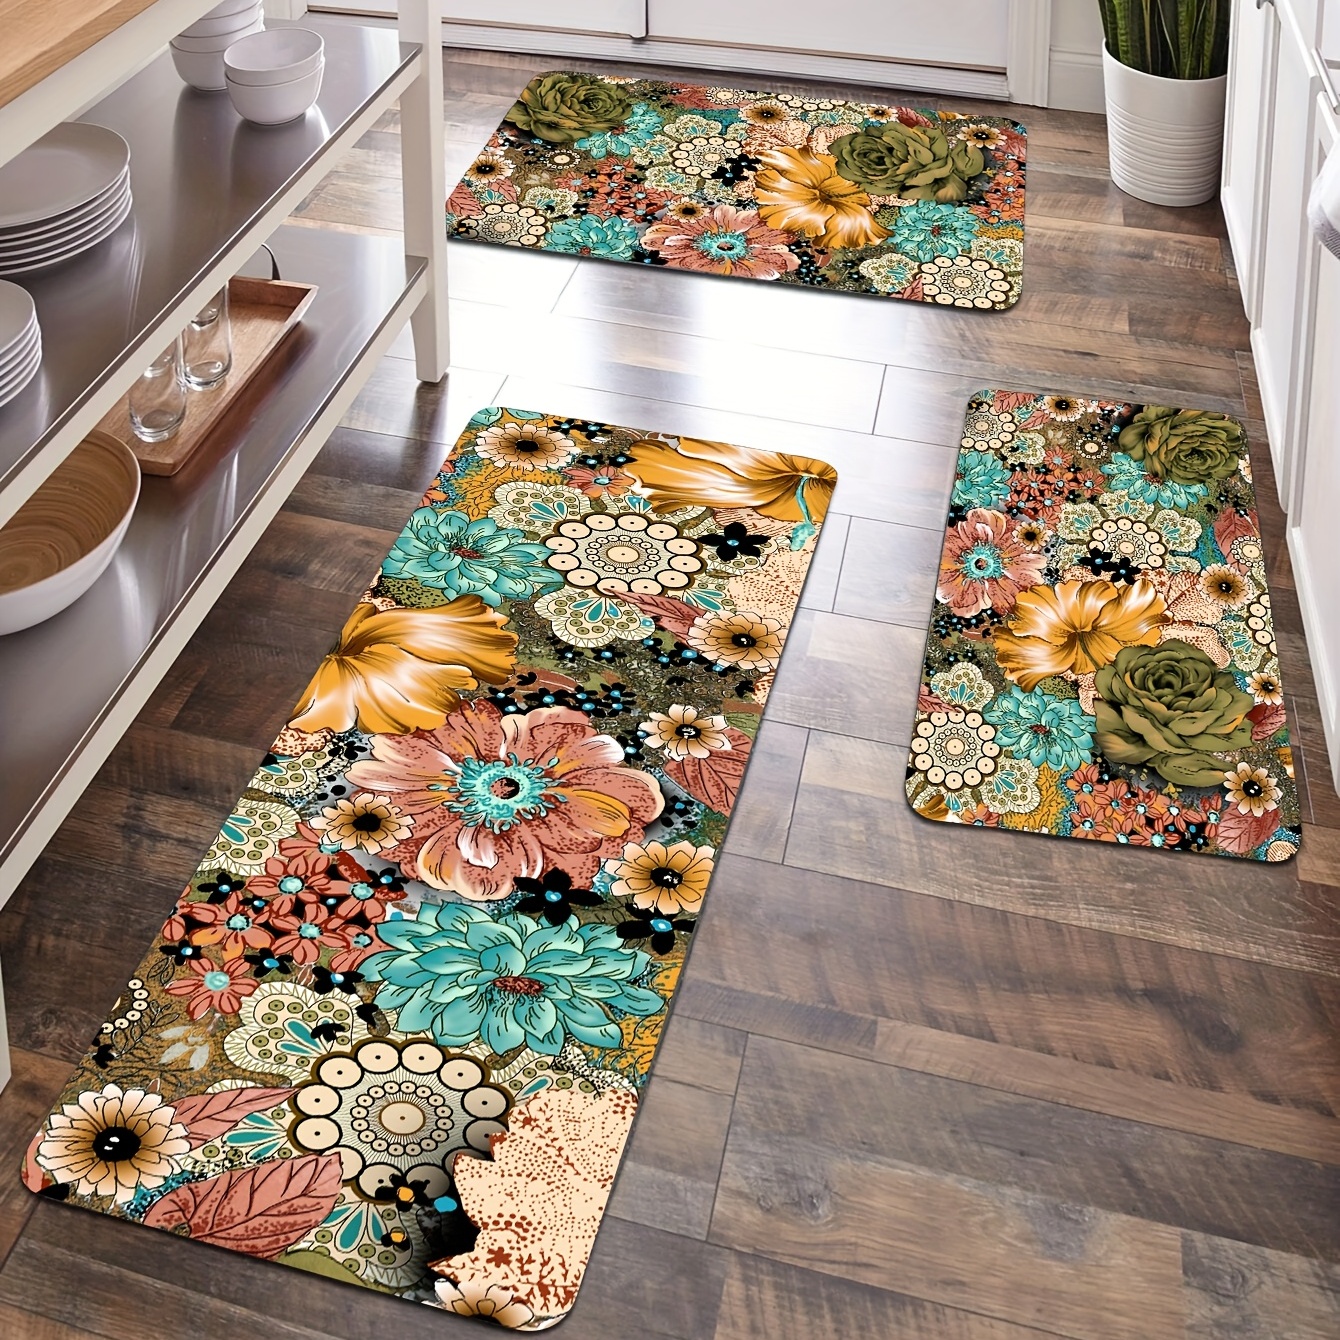  Teamery Tapetes de cocina para piso, alfombras de